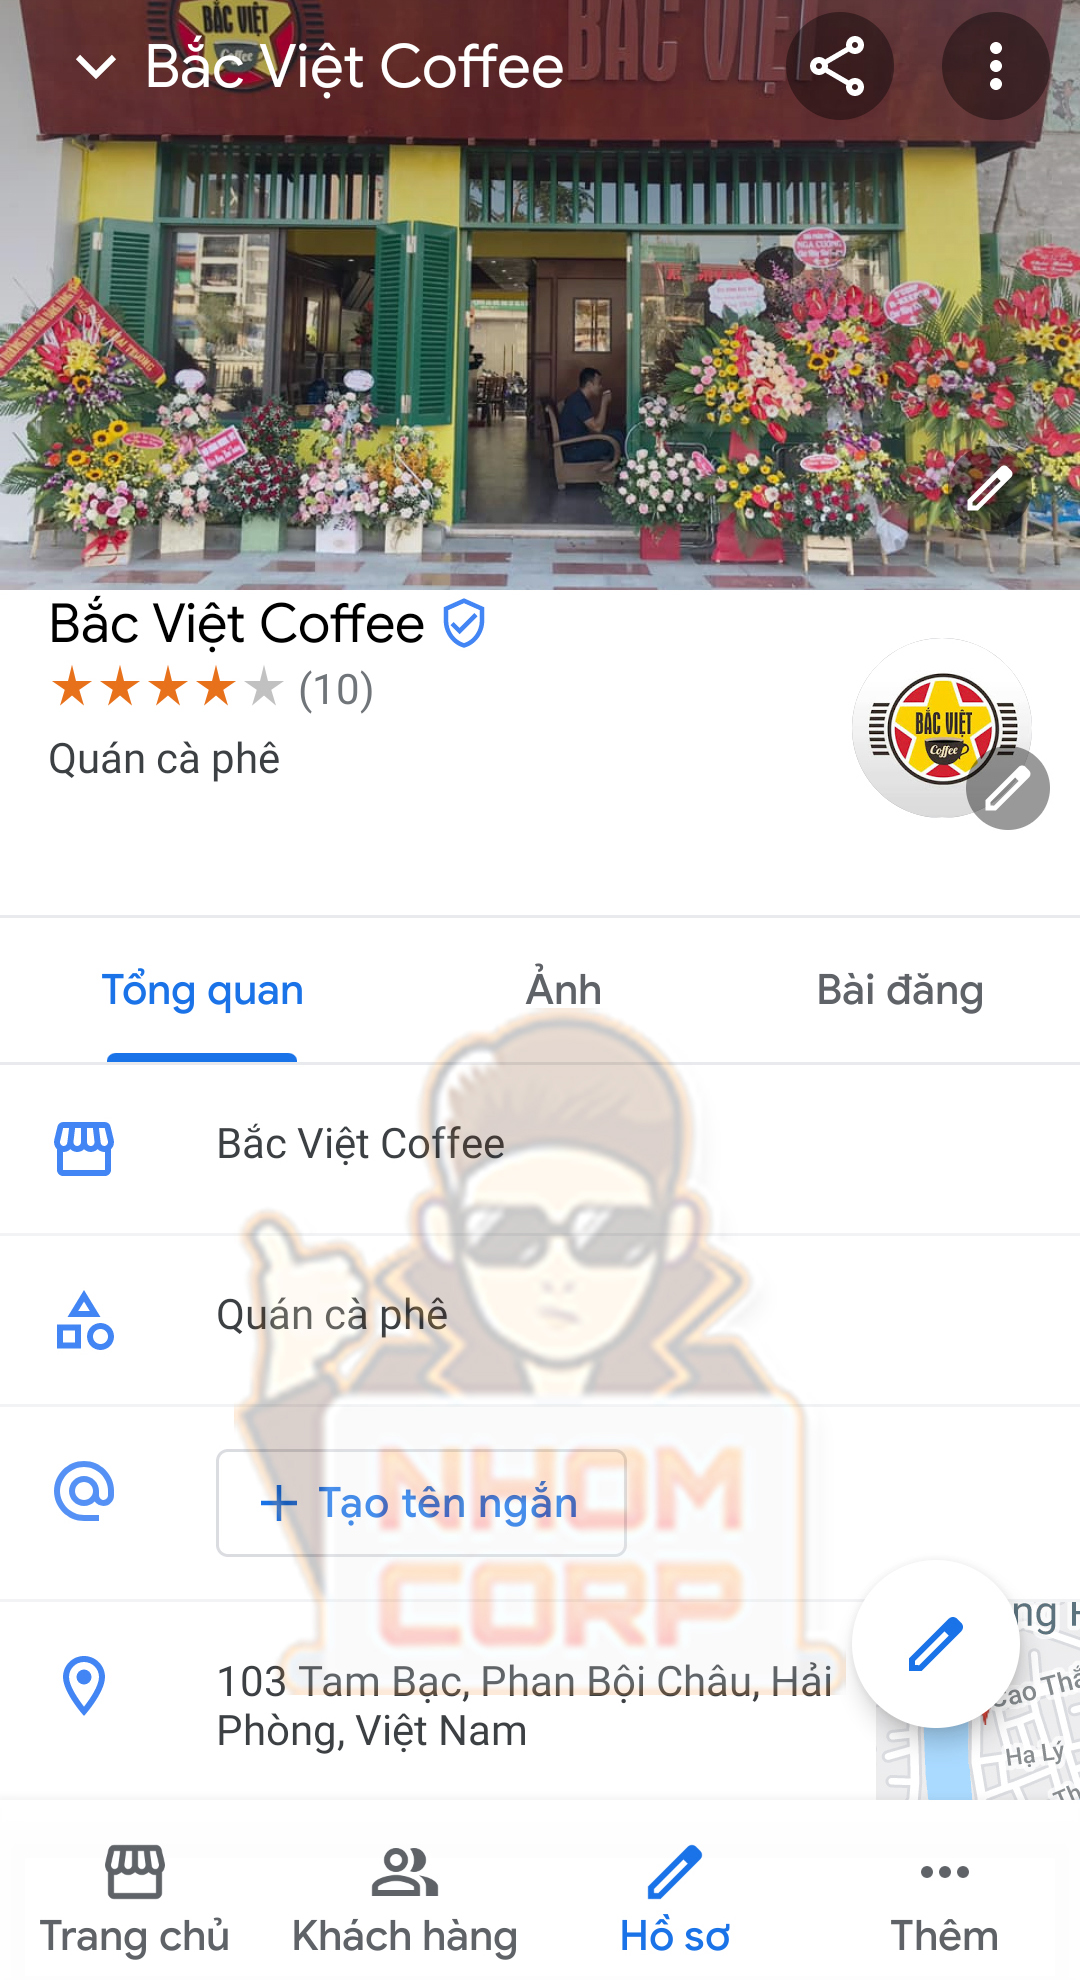 Bắc Việt Coffee